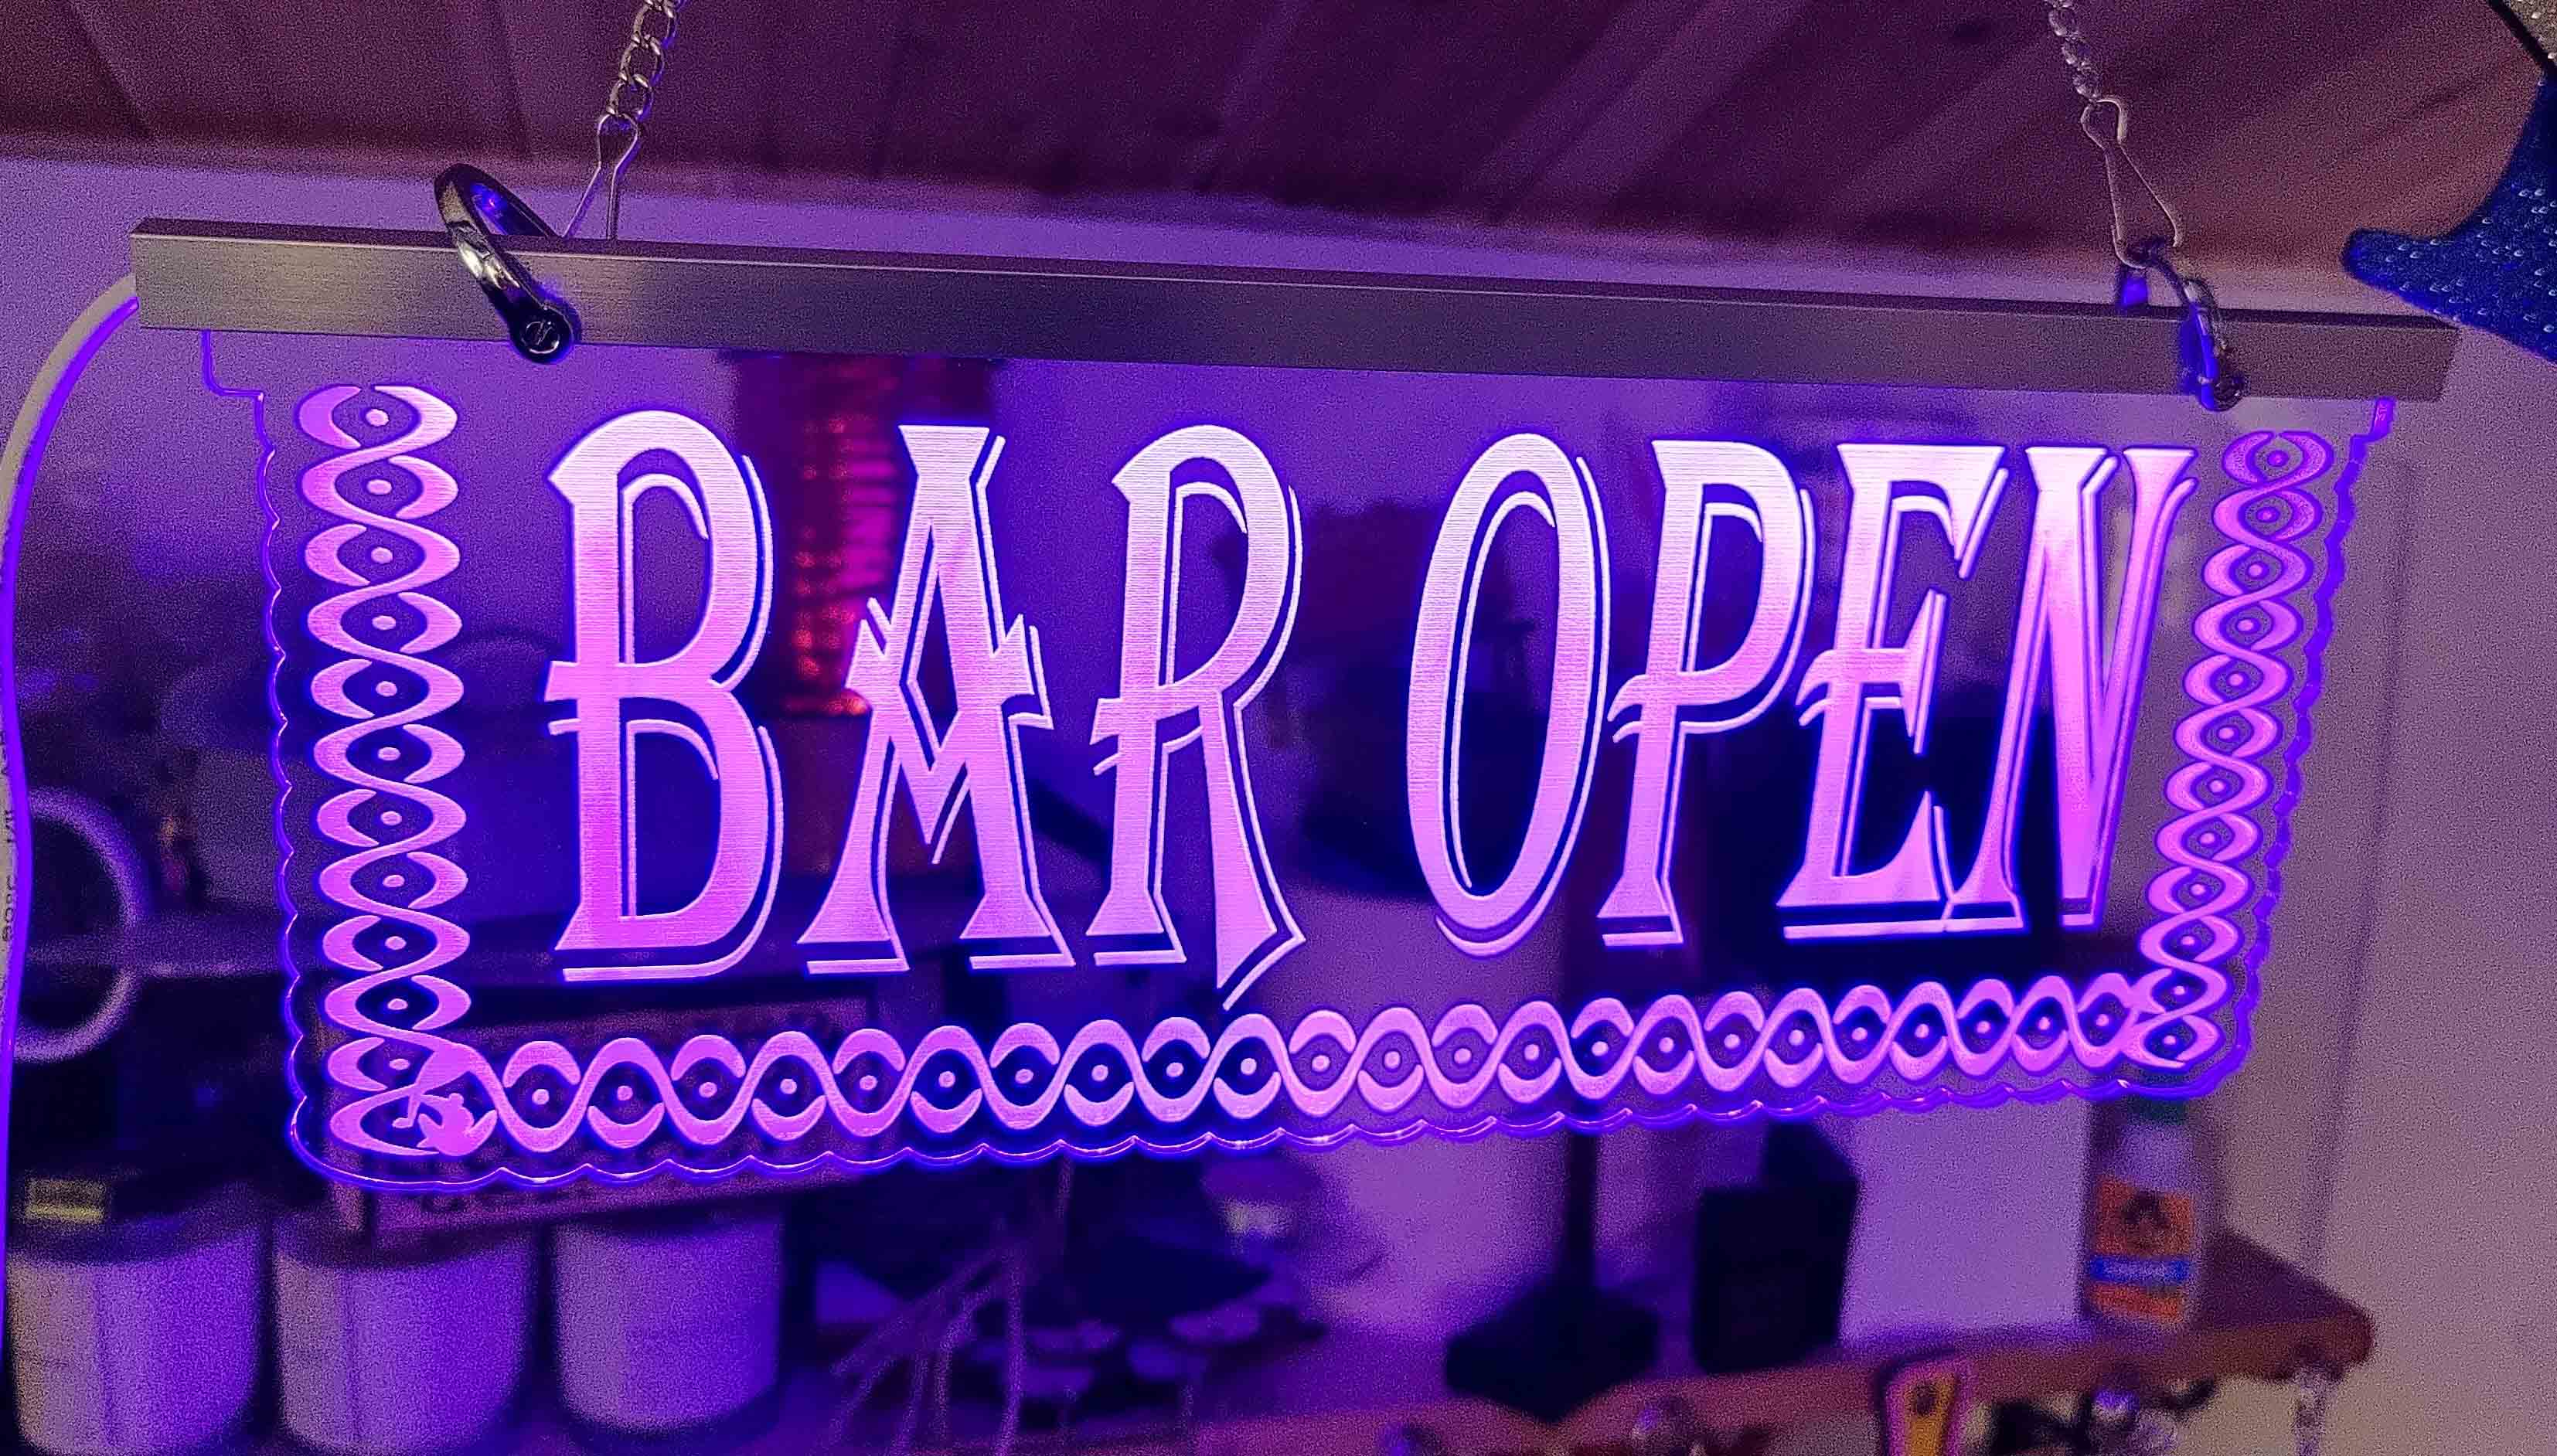 Bar open led sign mancave or home bar